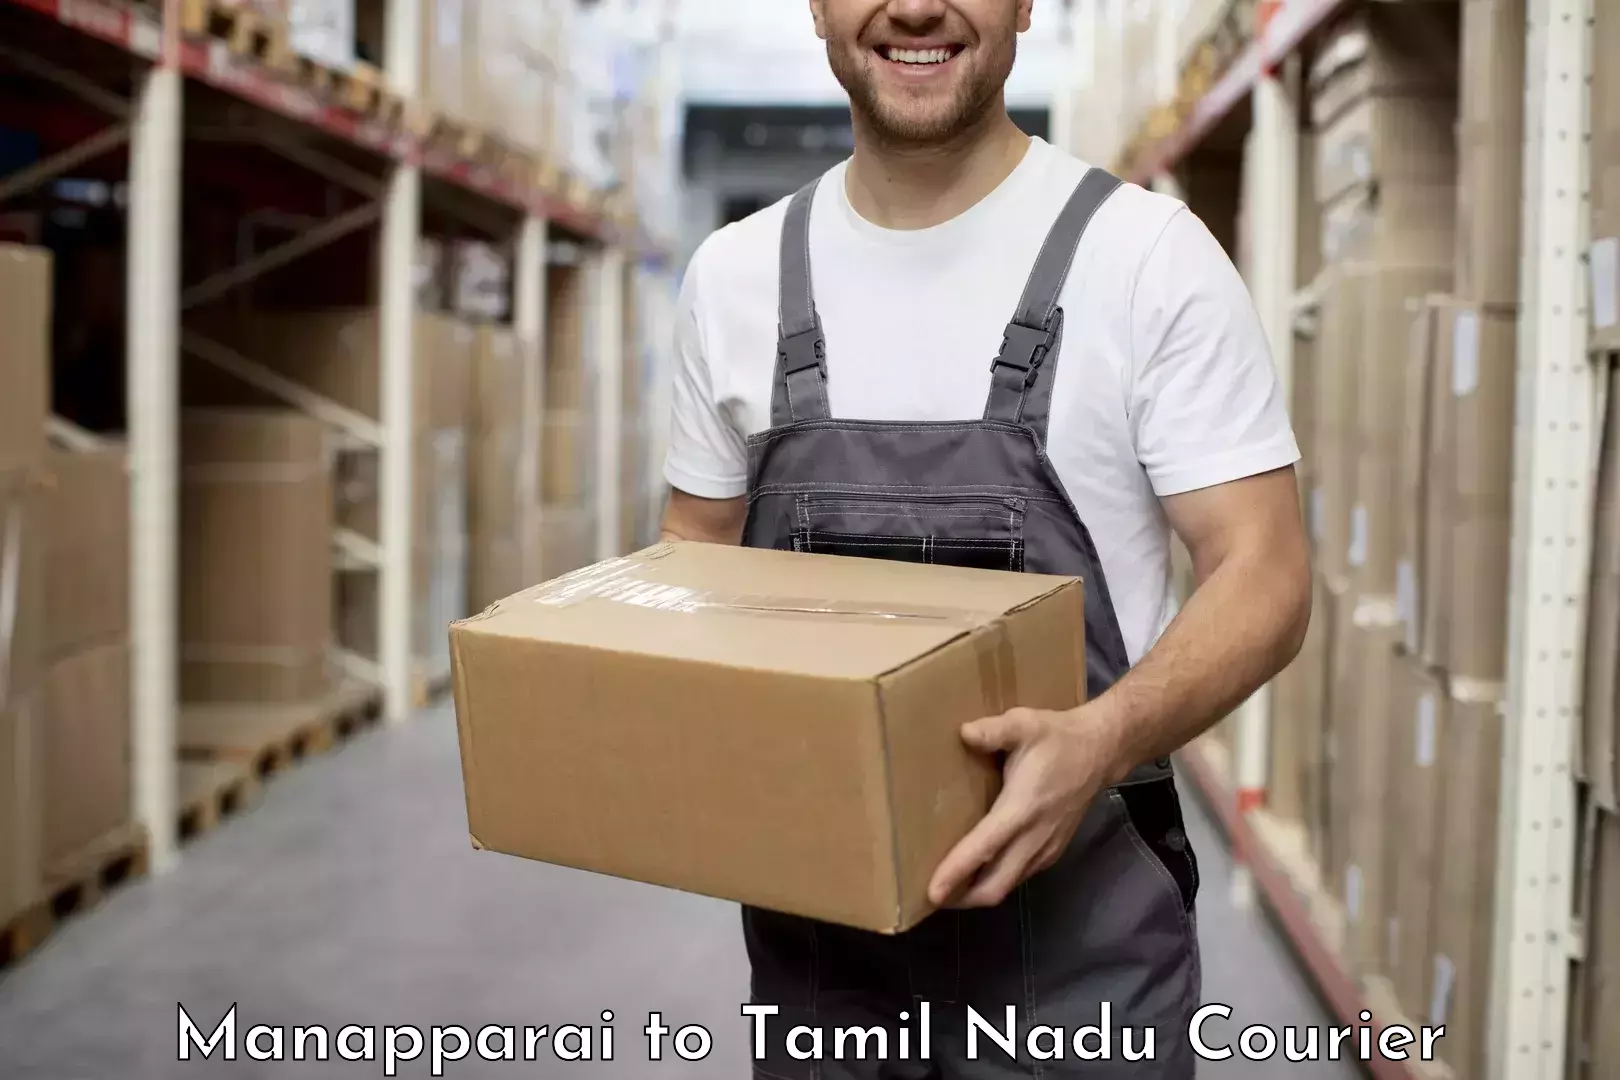 Global shipping networks Manapparai to Tamil Nadu